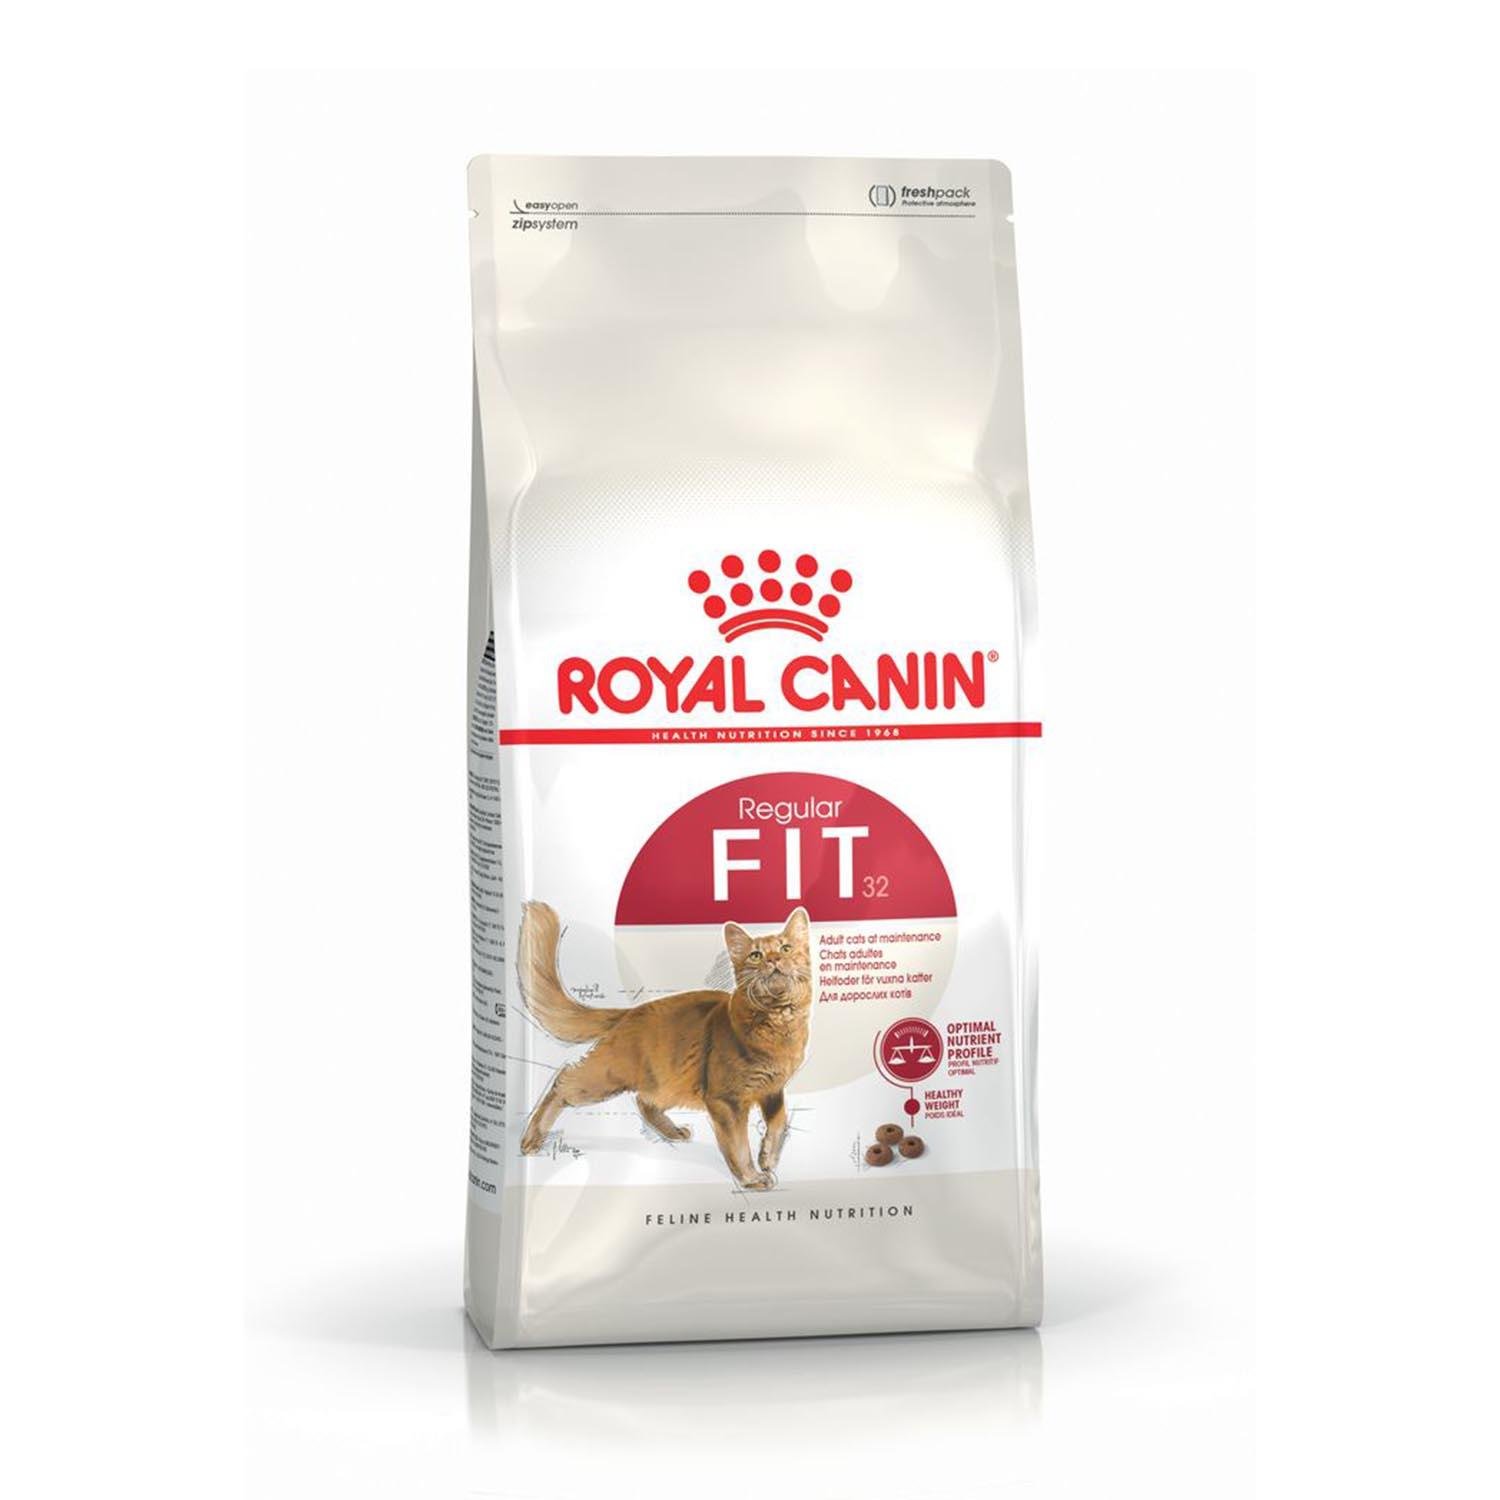 Royal Canin Fit 32 Yetişkin Kedi Mamasi 15 Kg